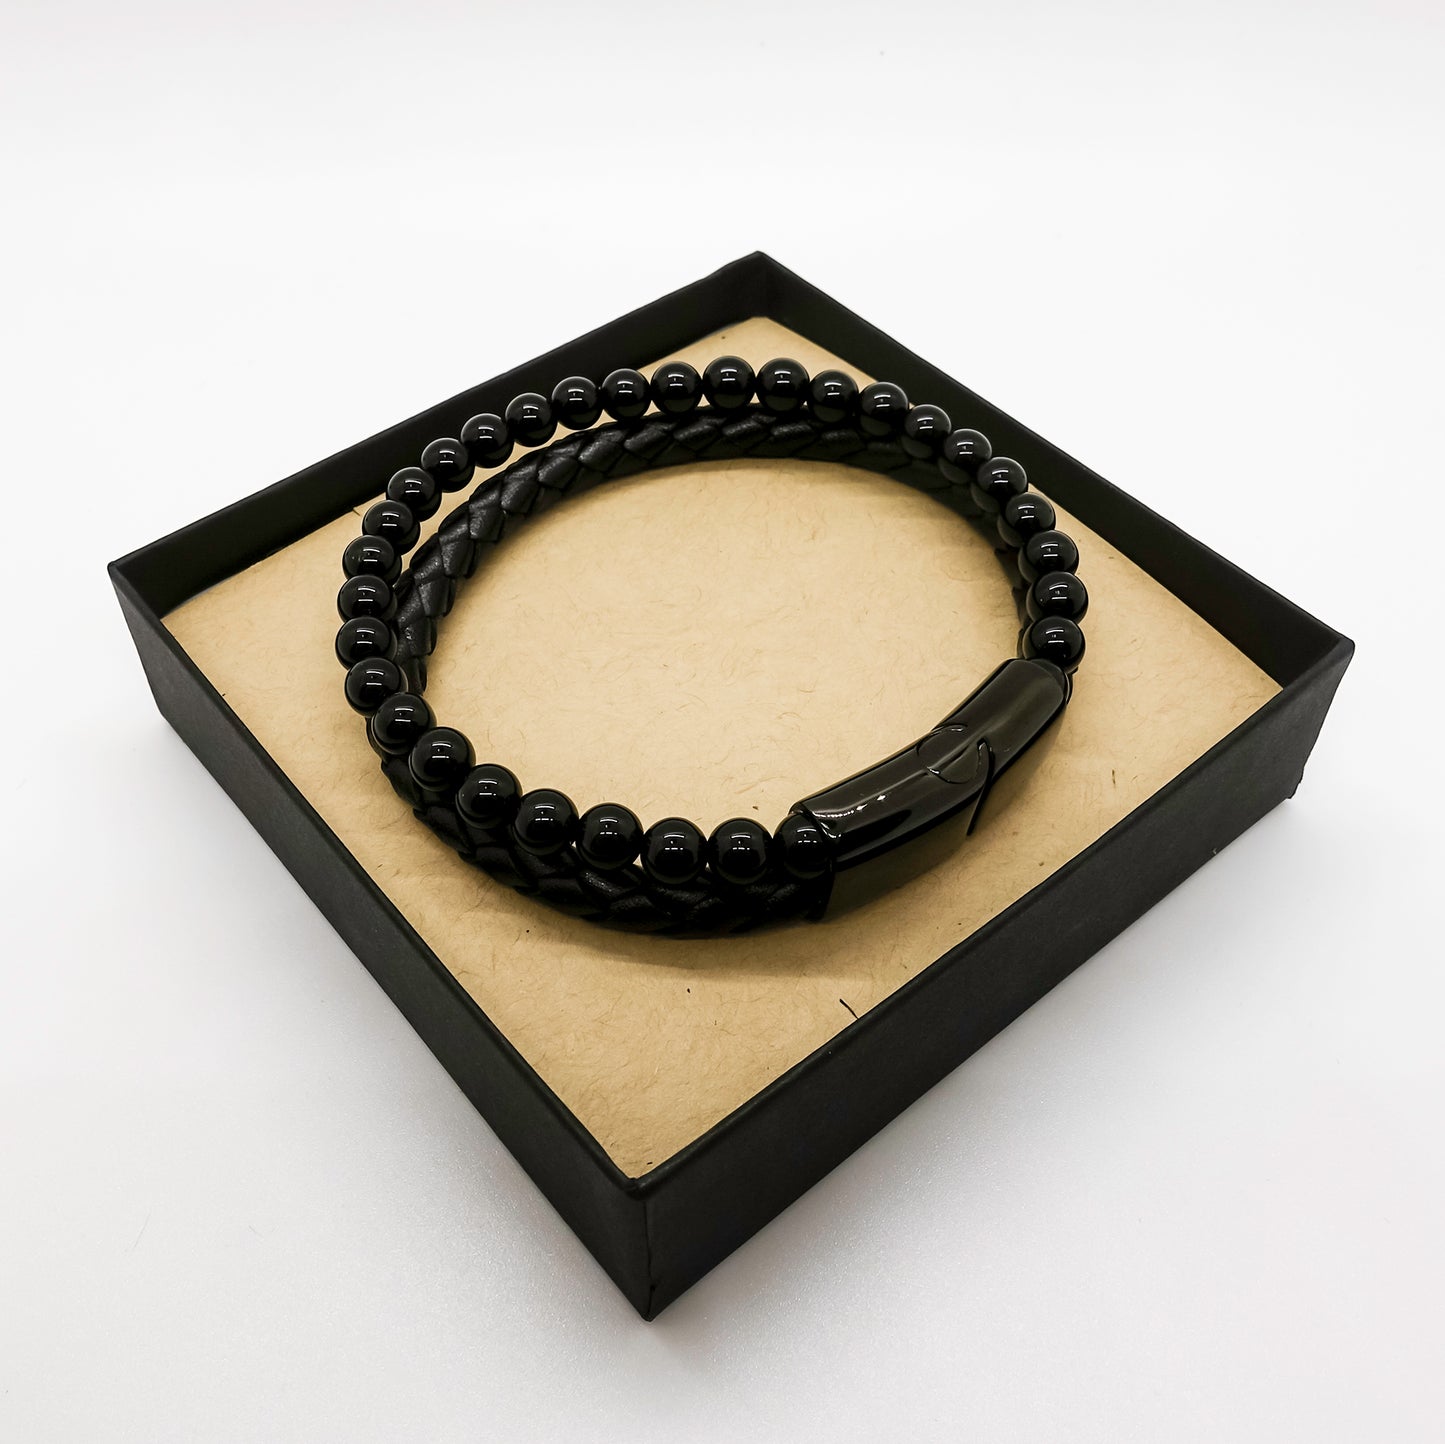 Stone Bracelet with Genuine Leather Braided Bracelet | To Husband | From Wife